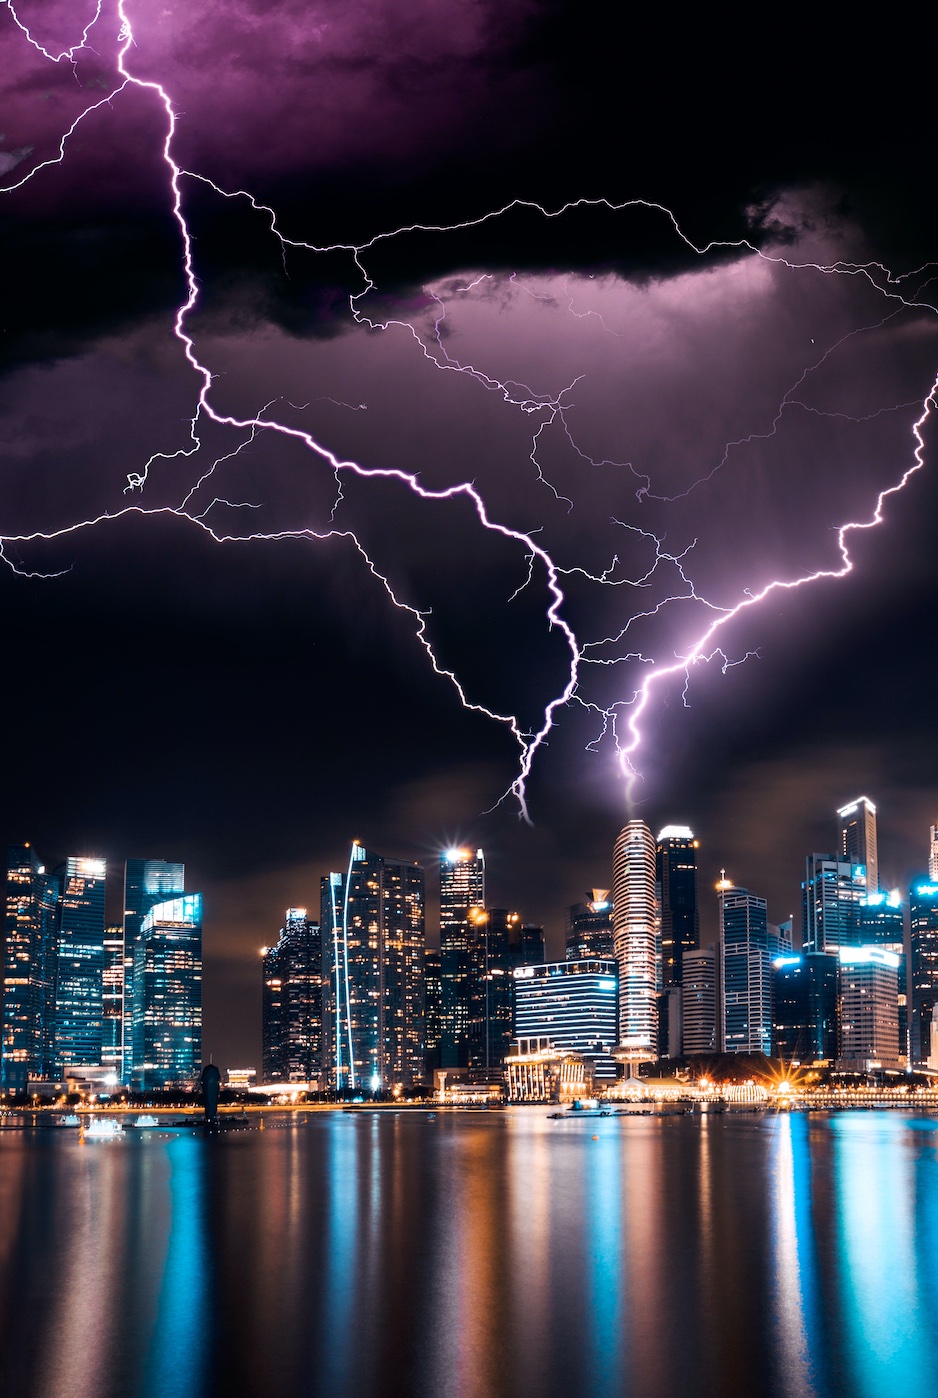 Lightning strikes over city; image by Lee Junda, via Unsplash.com.